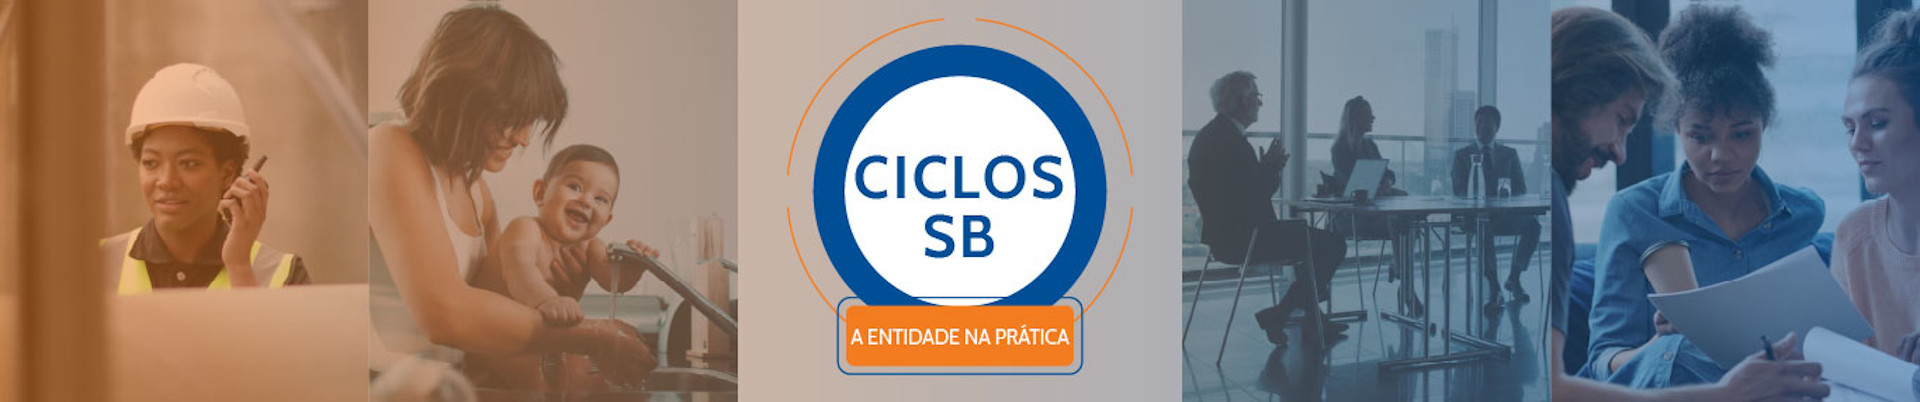 Ciclos SB